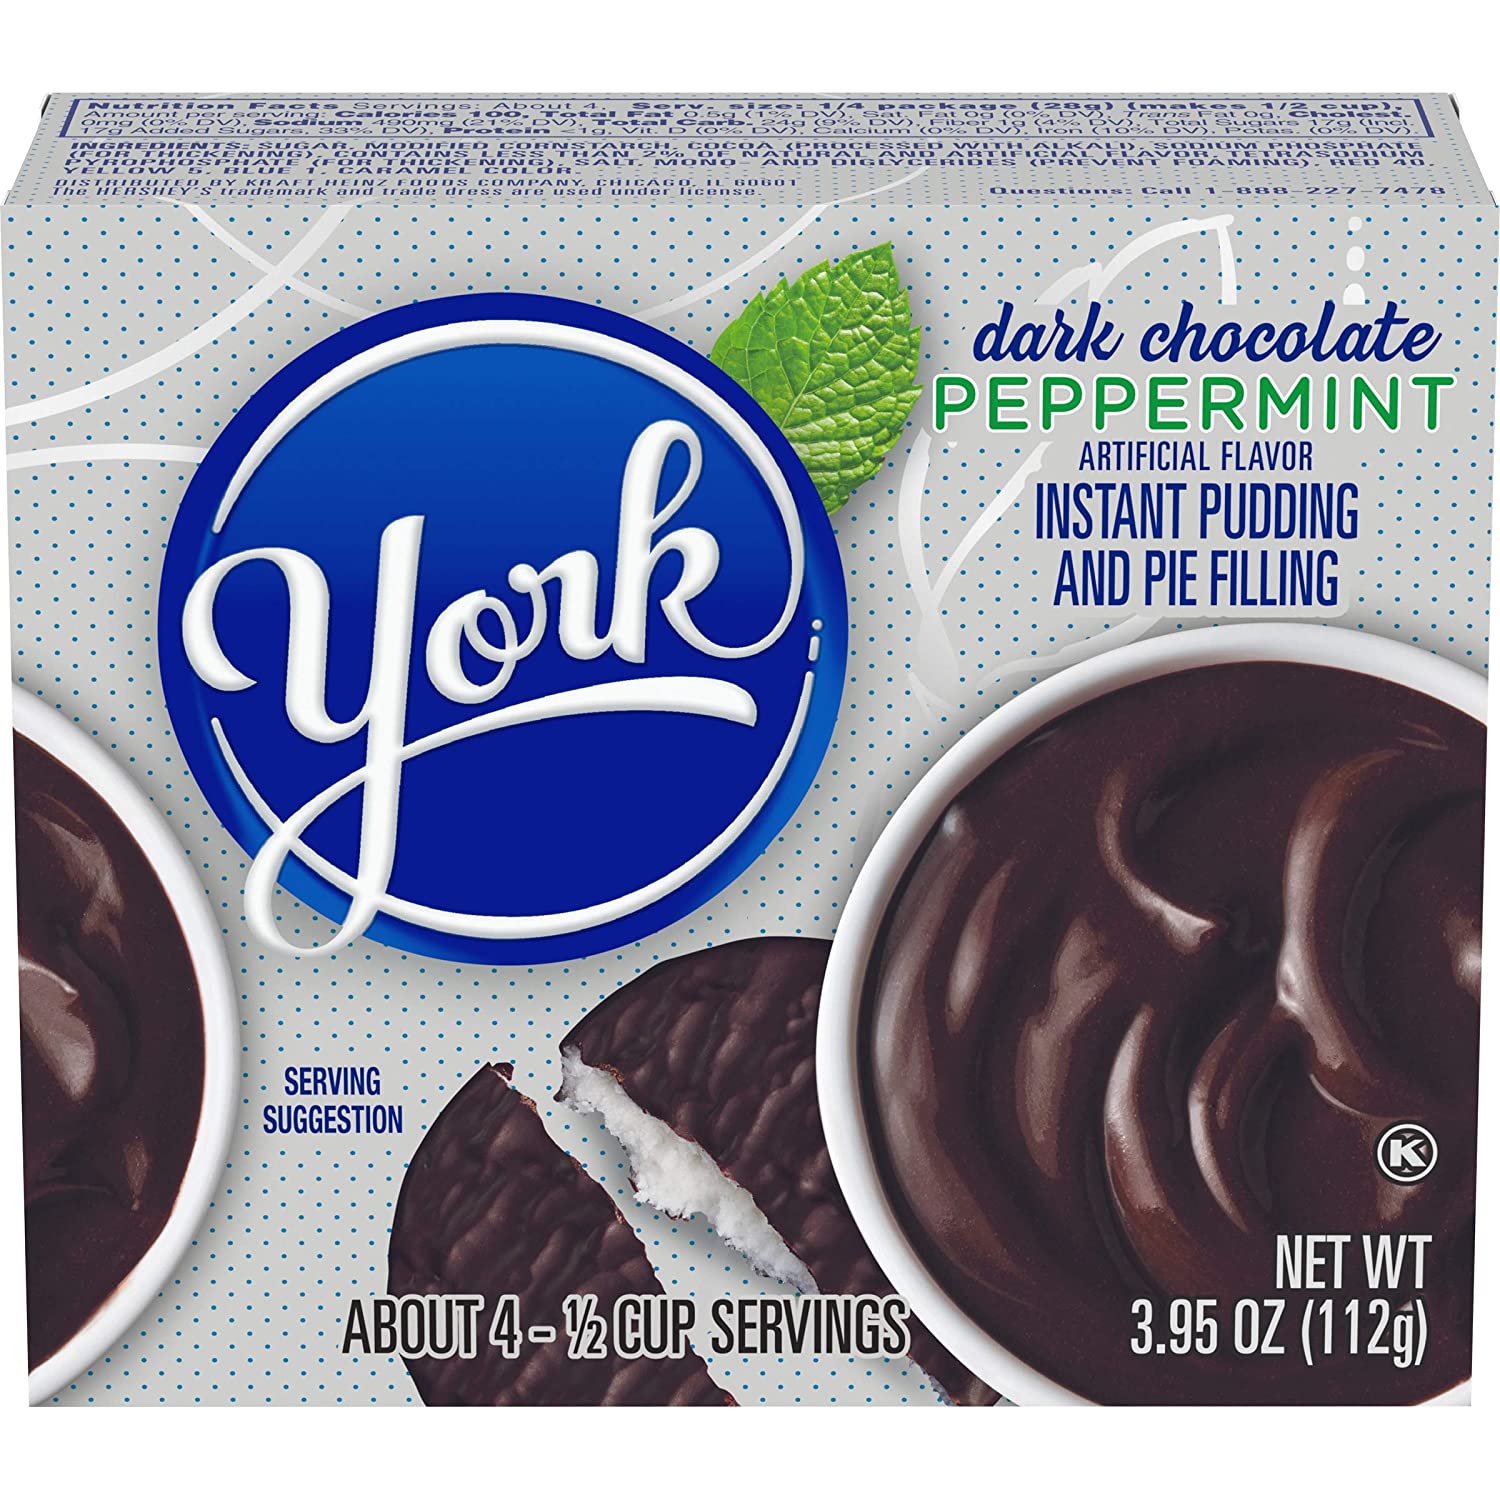 BỘT BÁNH PUDDING SOCOLA ĐEN - BẠC HÀ Her-shey's York Peppermint Chocolate Instant Pudding and Pie Filling, 112g (3.95 oz)